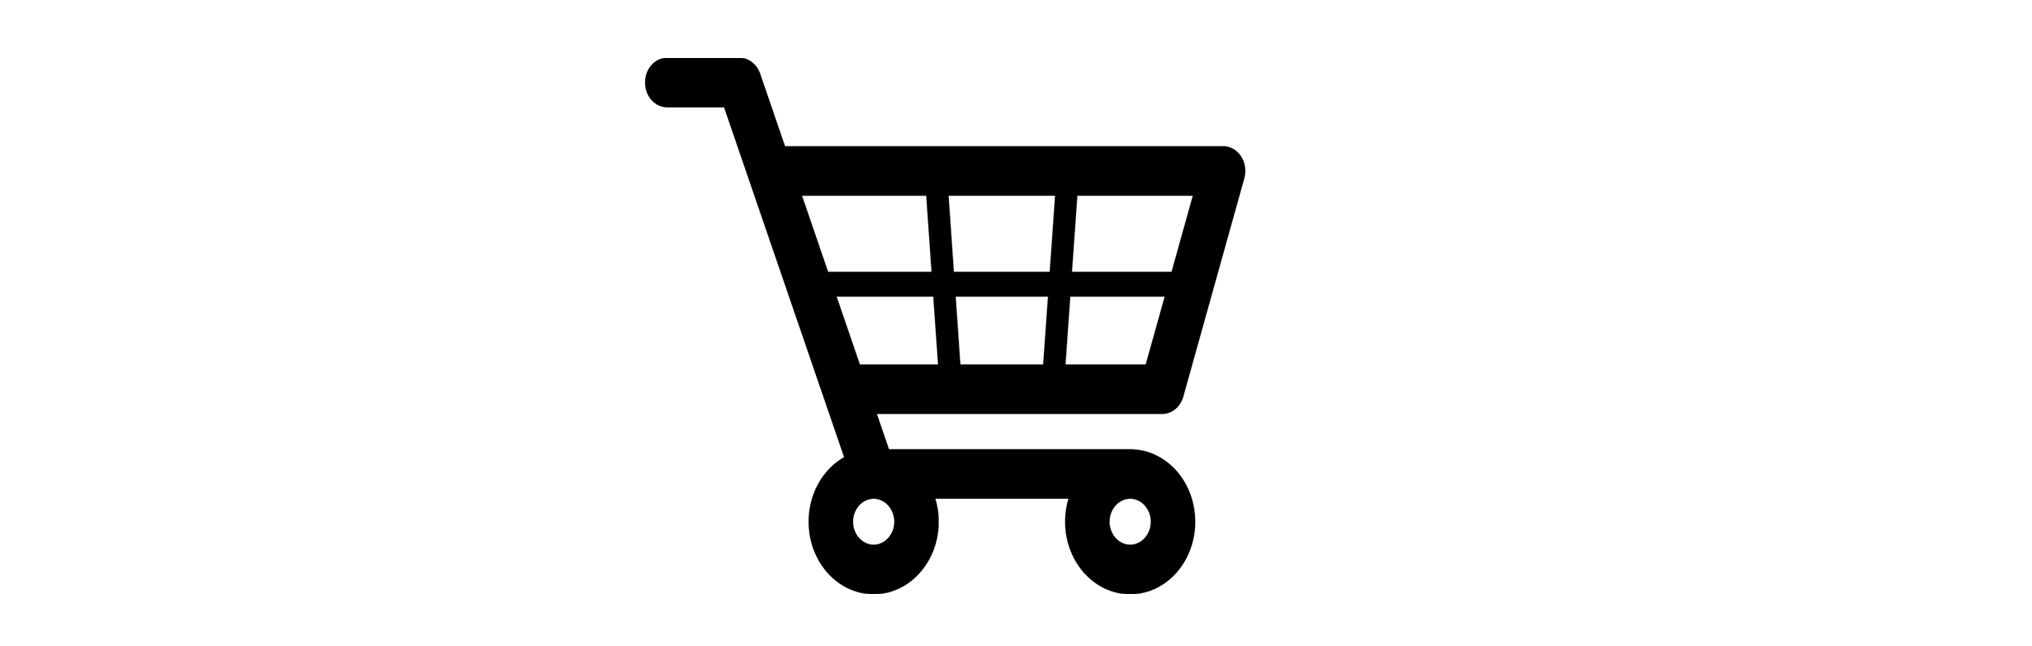 shopping cart icon in white circle